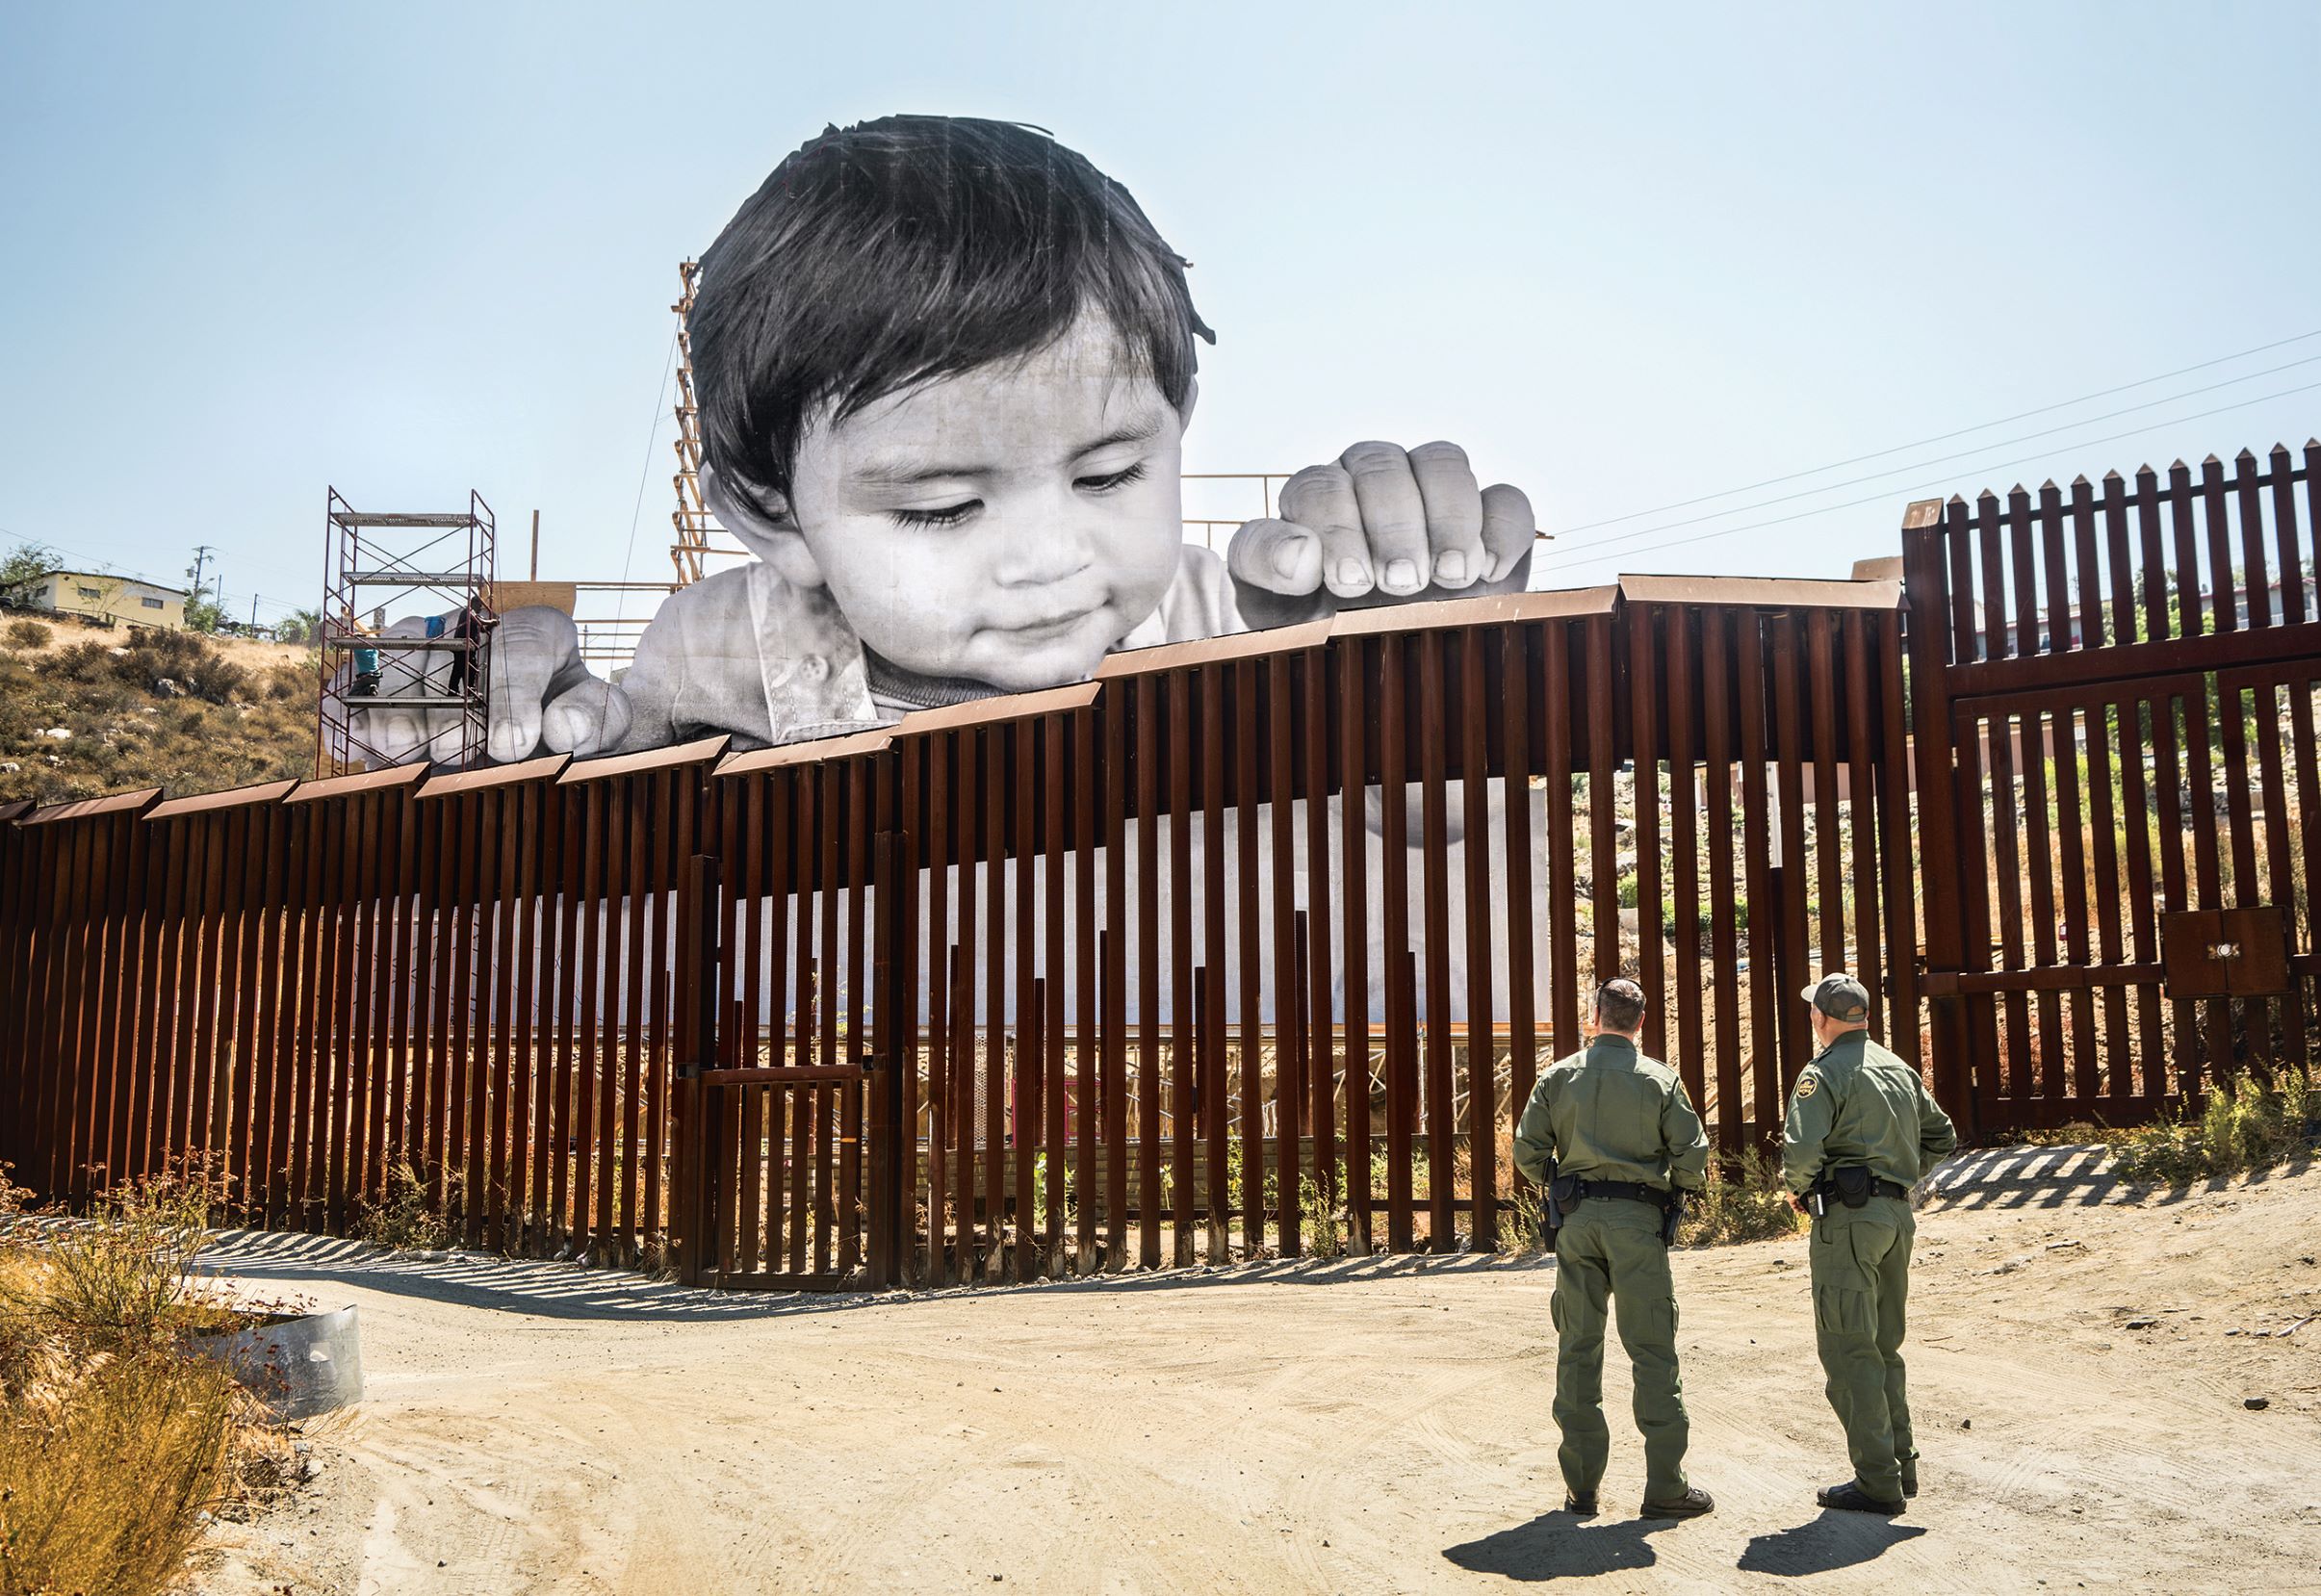 Kikito and the border patrol, Tecate, Mexico–USA border, 2017. Laurent Segretier, courtesy Galerie Perrotin / artwork © JR 